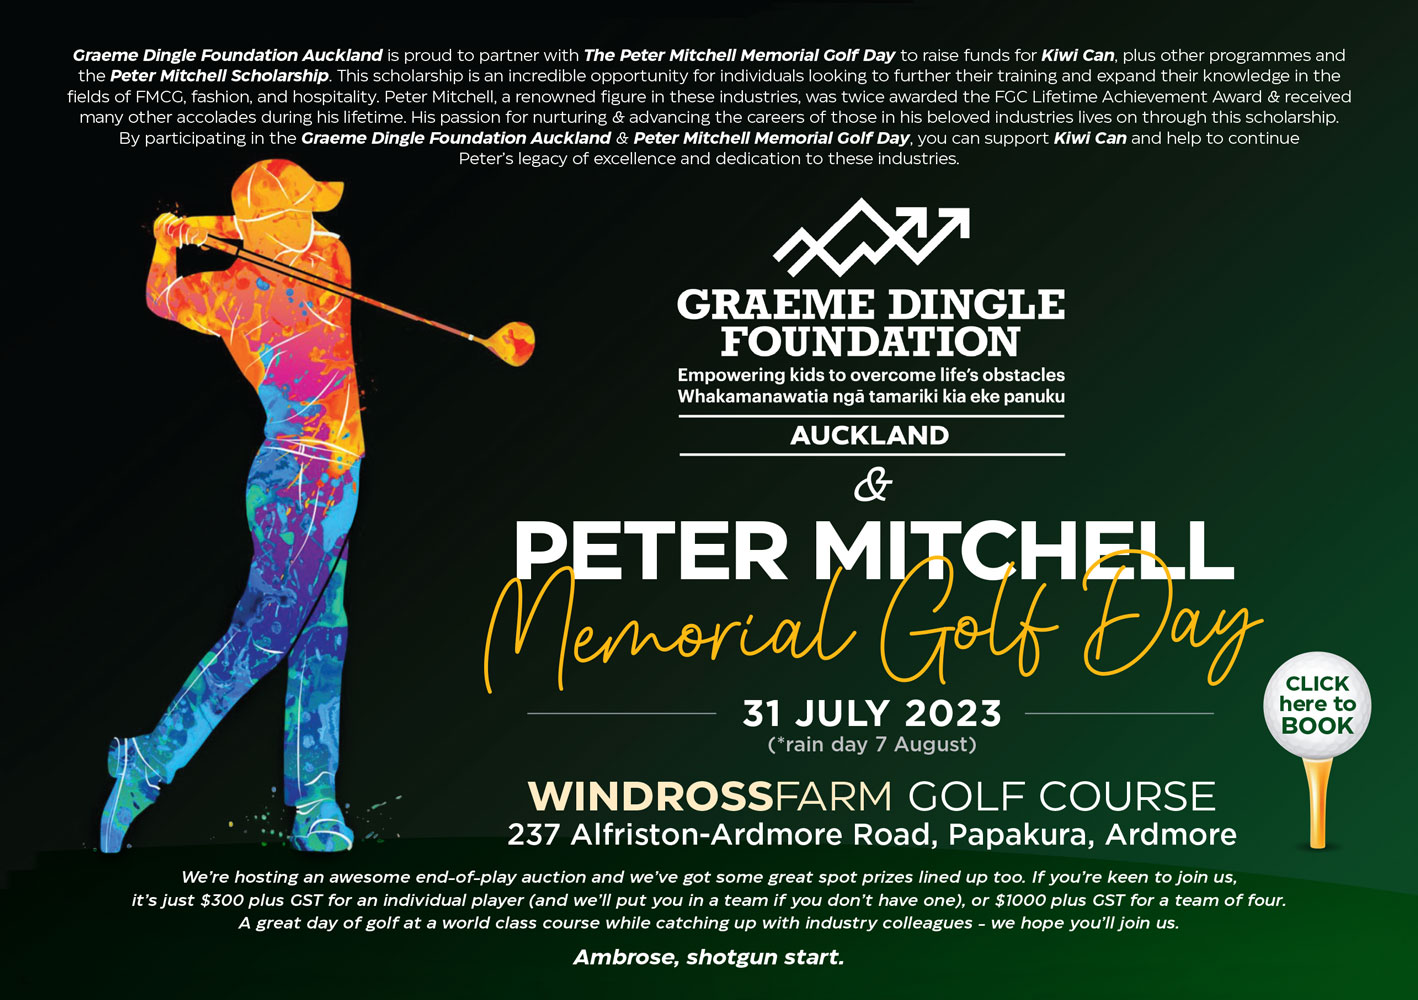 Peter mitchell Memorial Golf Day